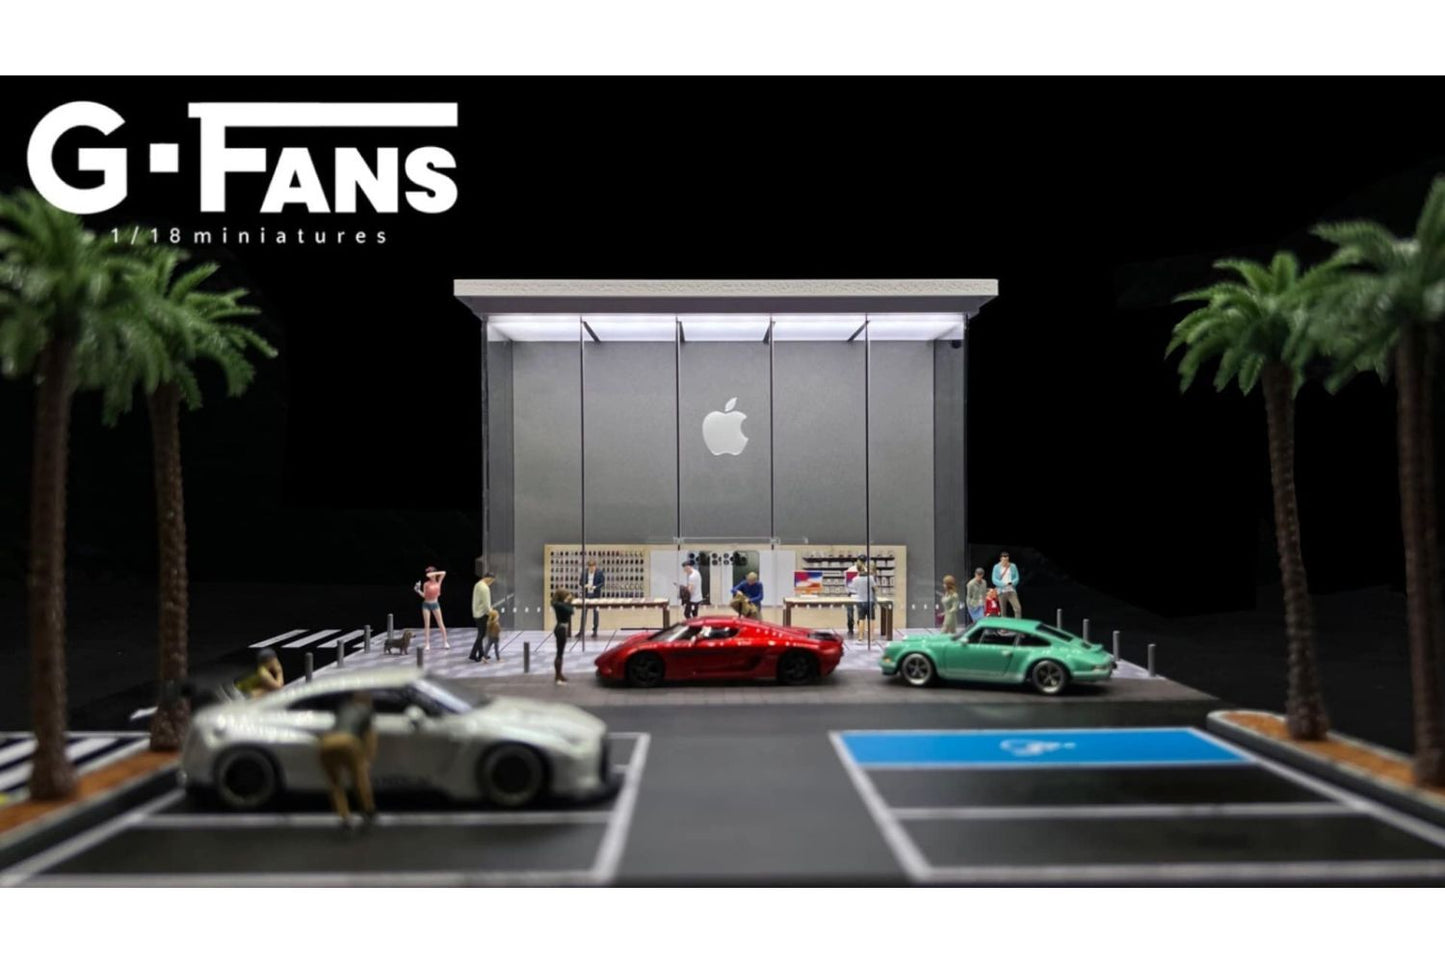 G-Fans 1/64 Scale Illuminated Apple Store Diorama Model